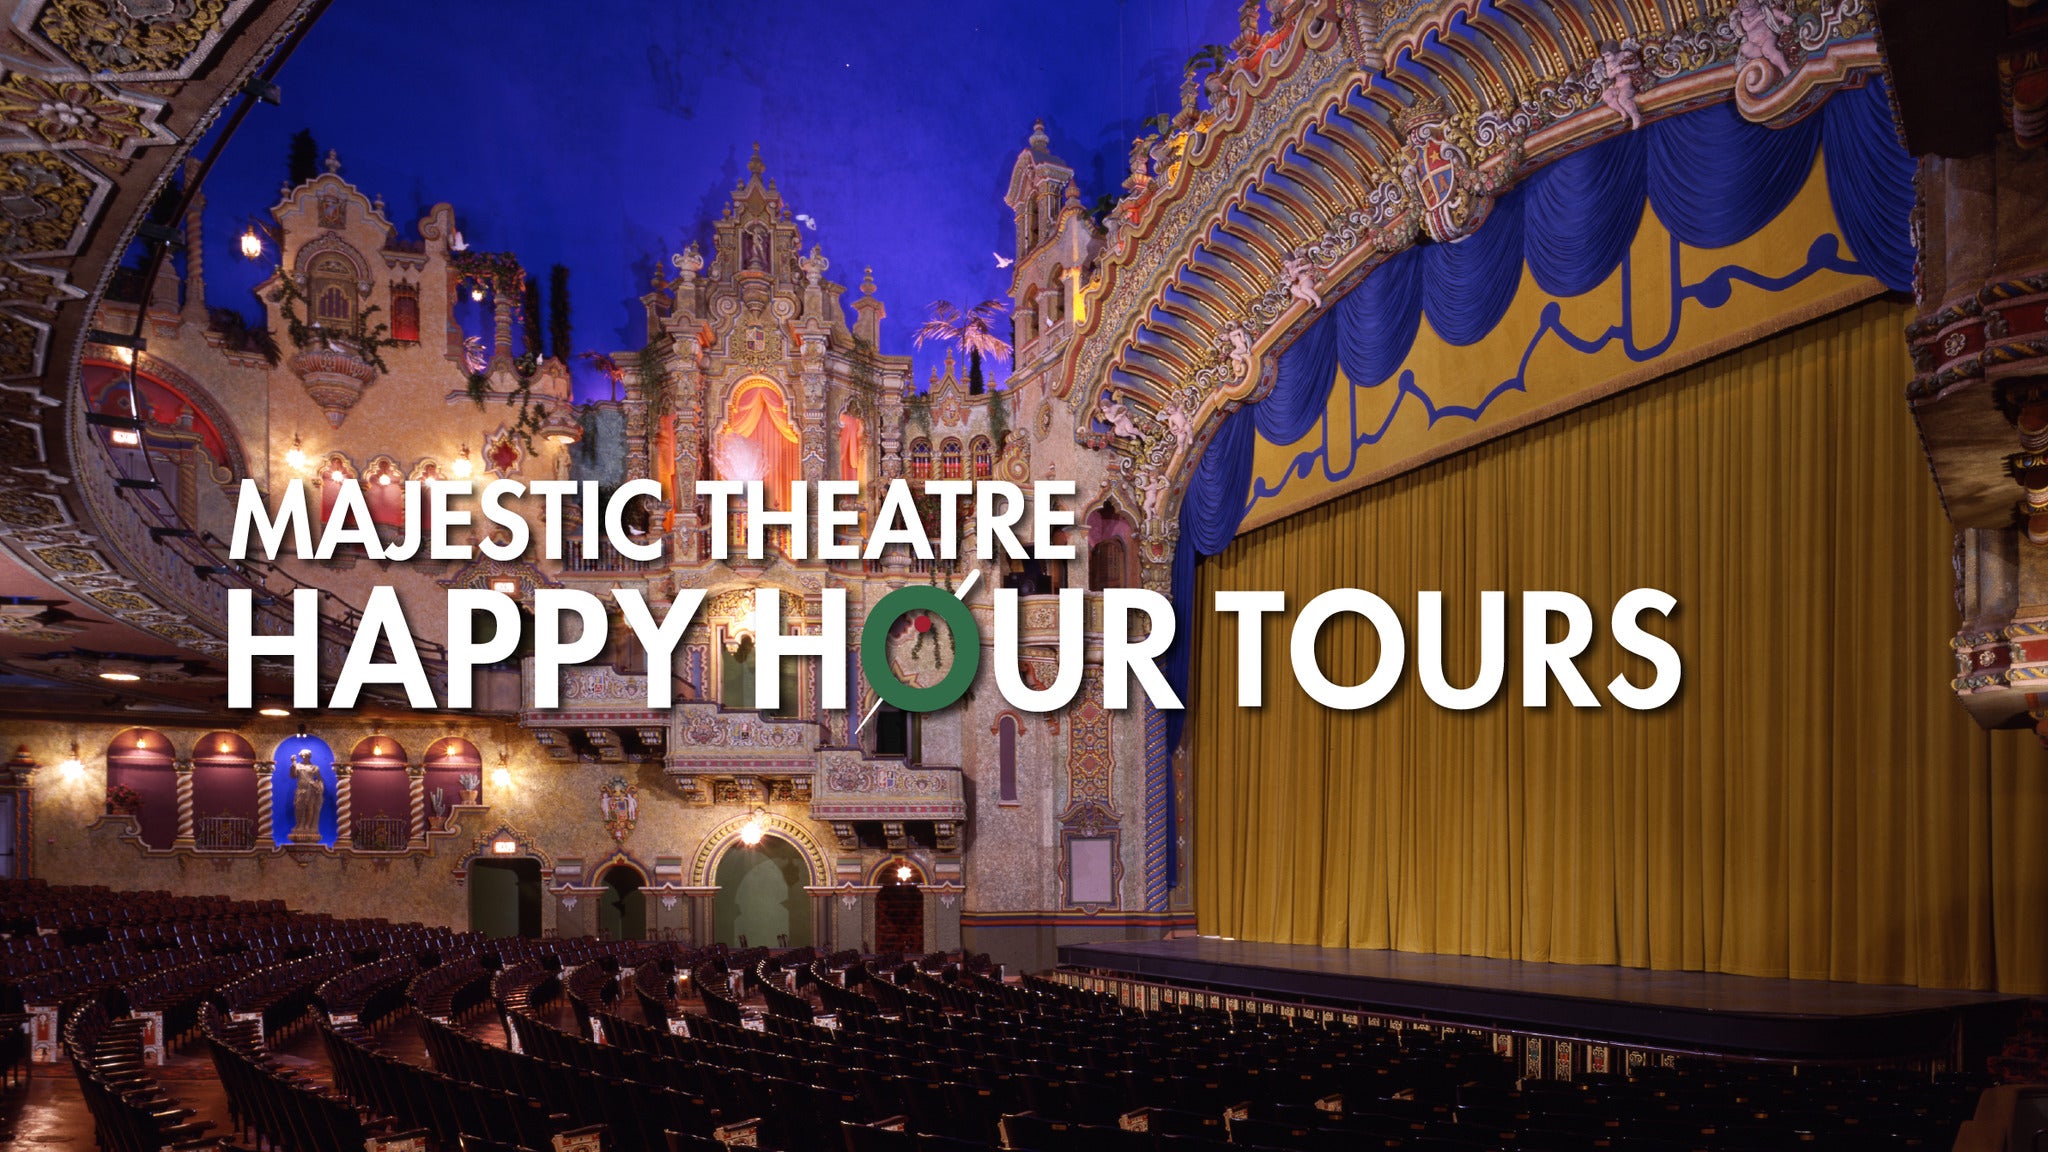 Majestic Theatre Happy Hour Tours presale information on freepresalepasswords.com